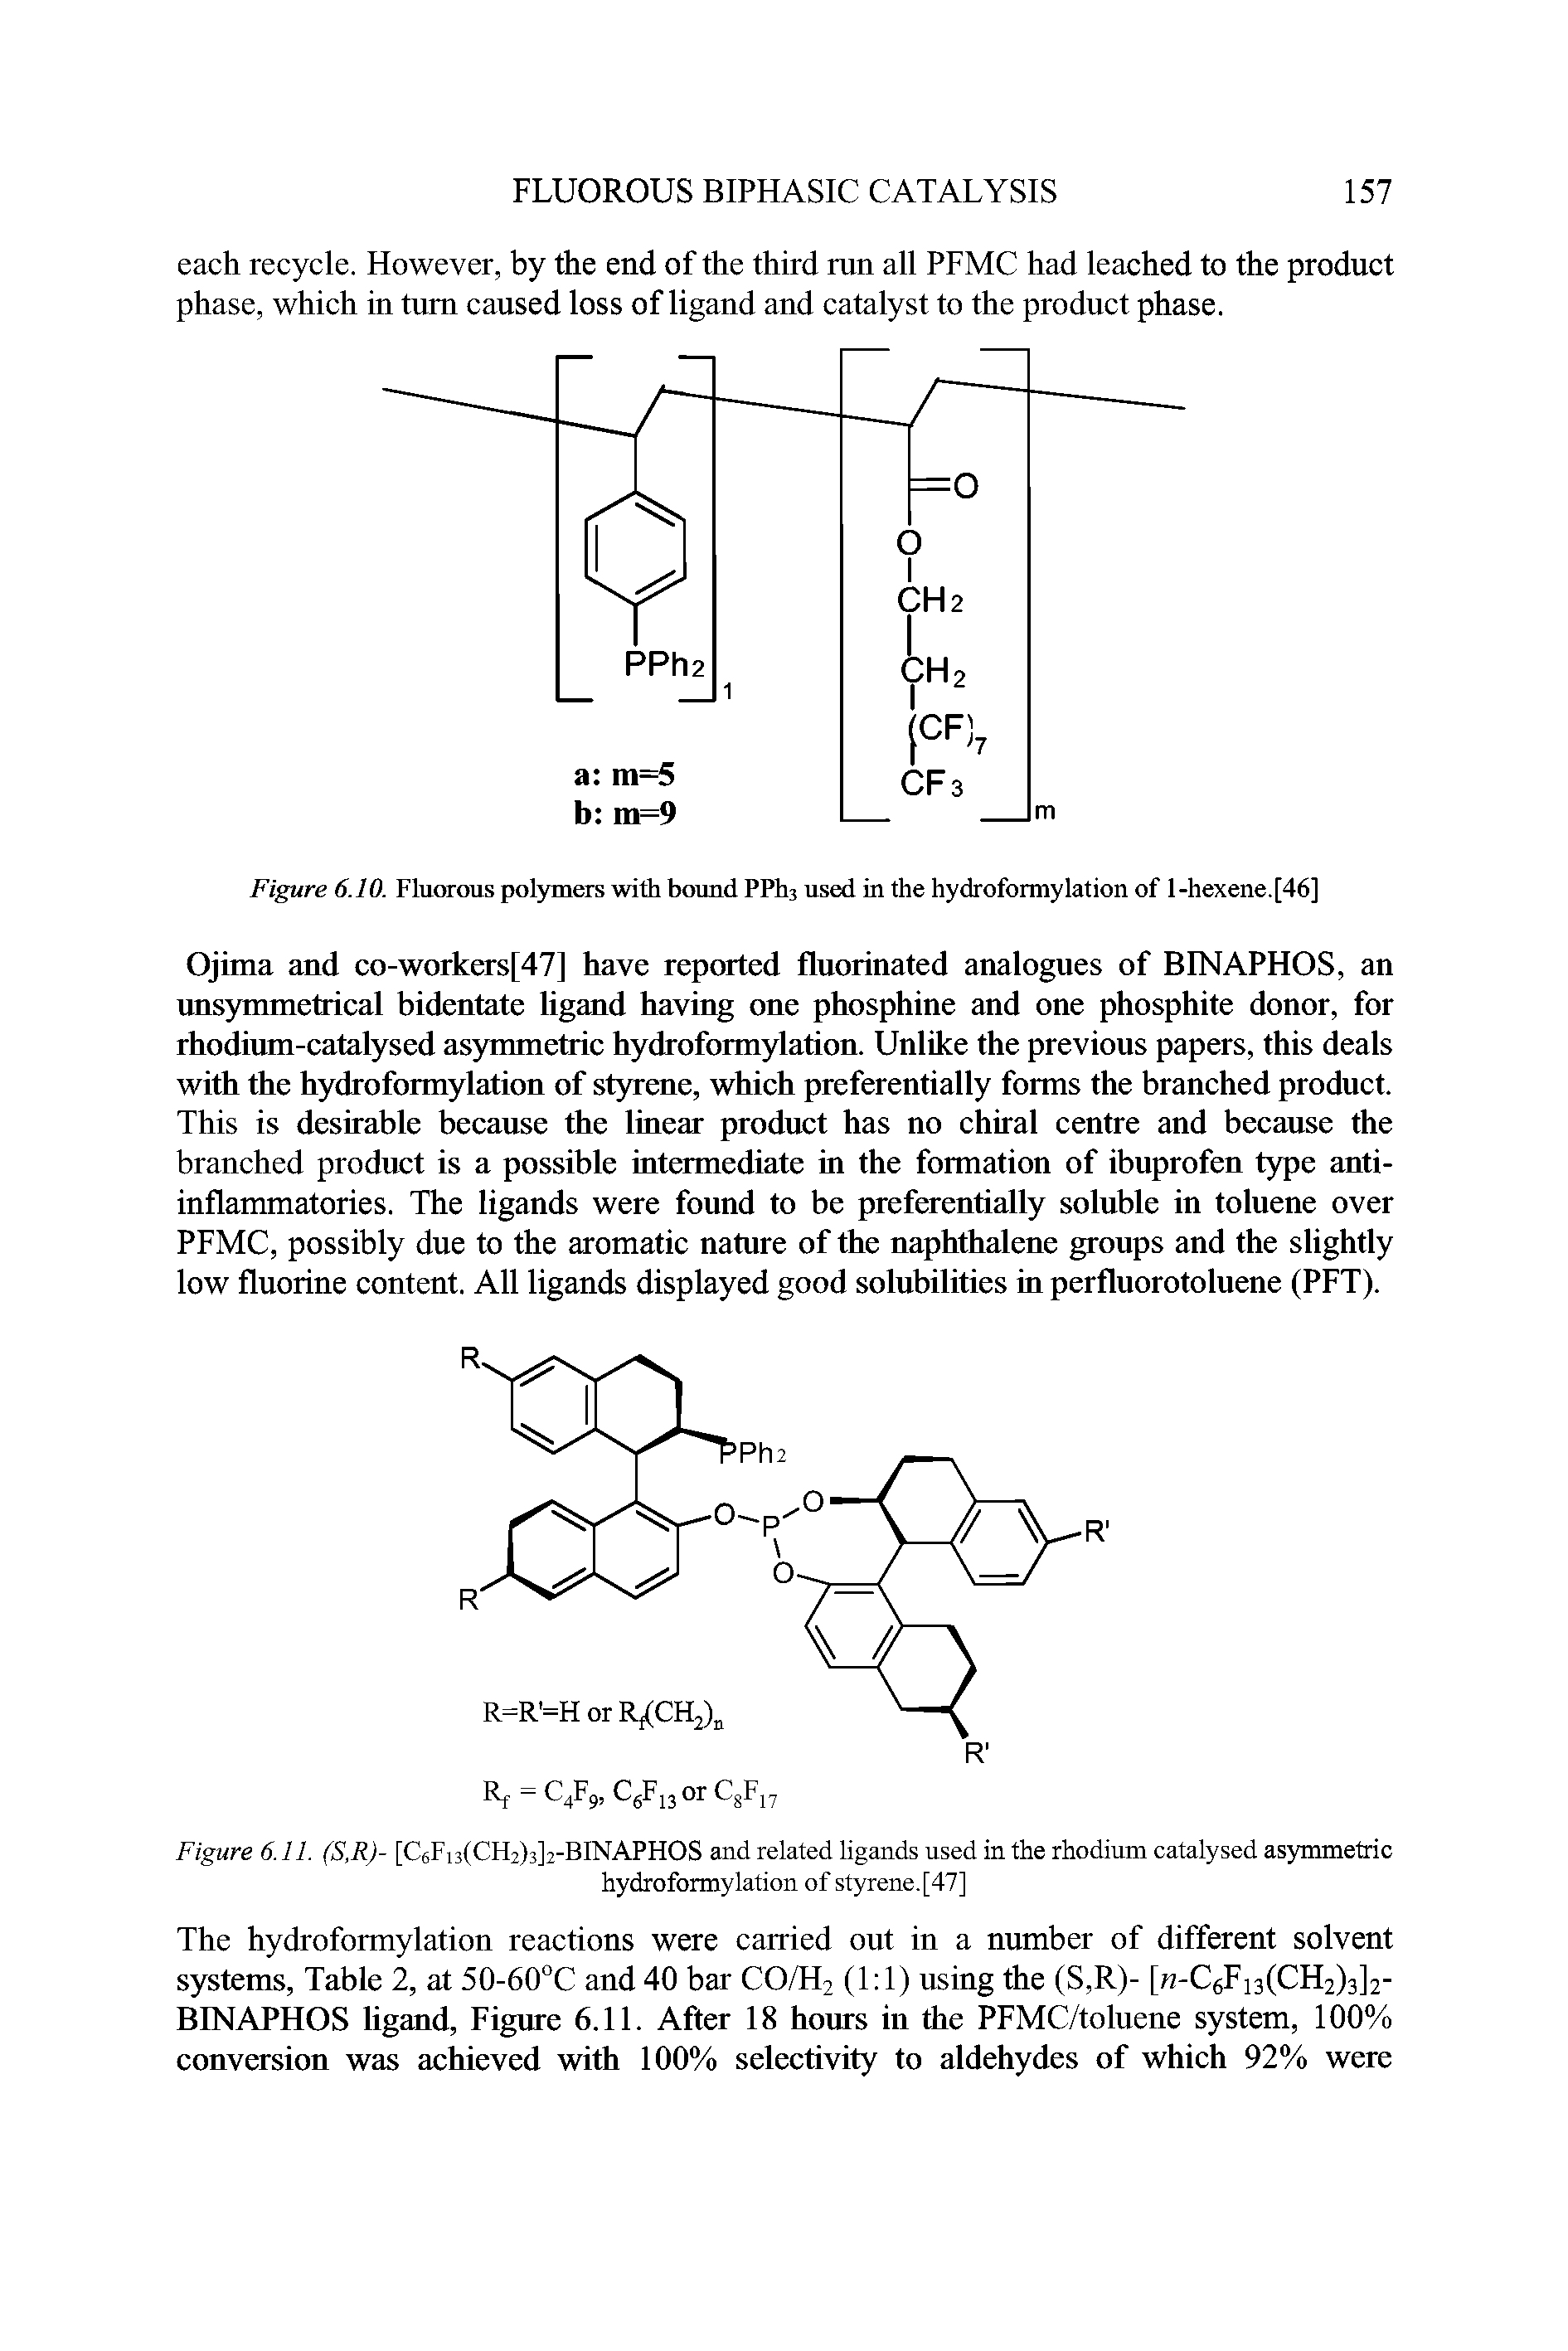 Figure 6.11. (S,R) [CsFutCFCbL-BINAPHOS and related ligands used in the rhodium catalysed asymmetric...